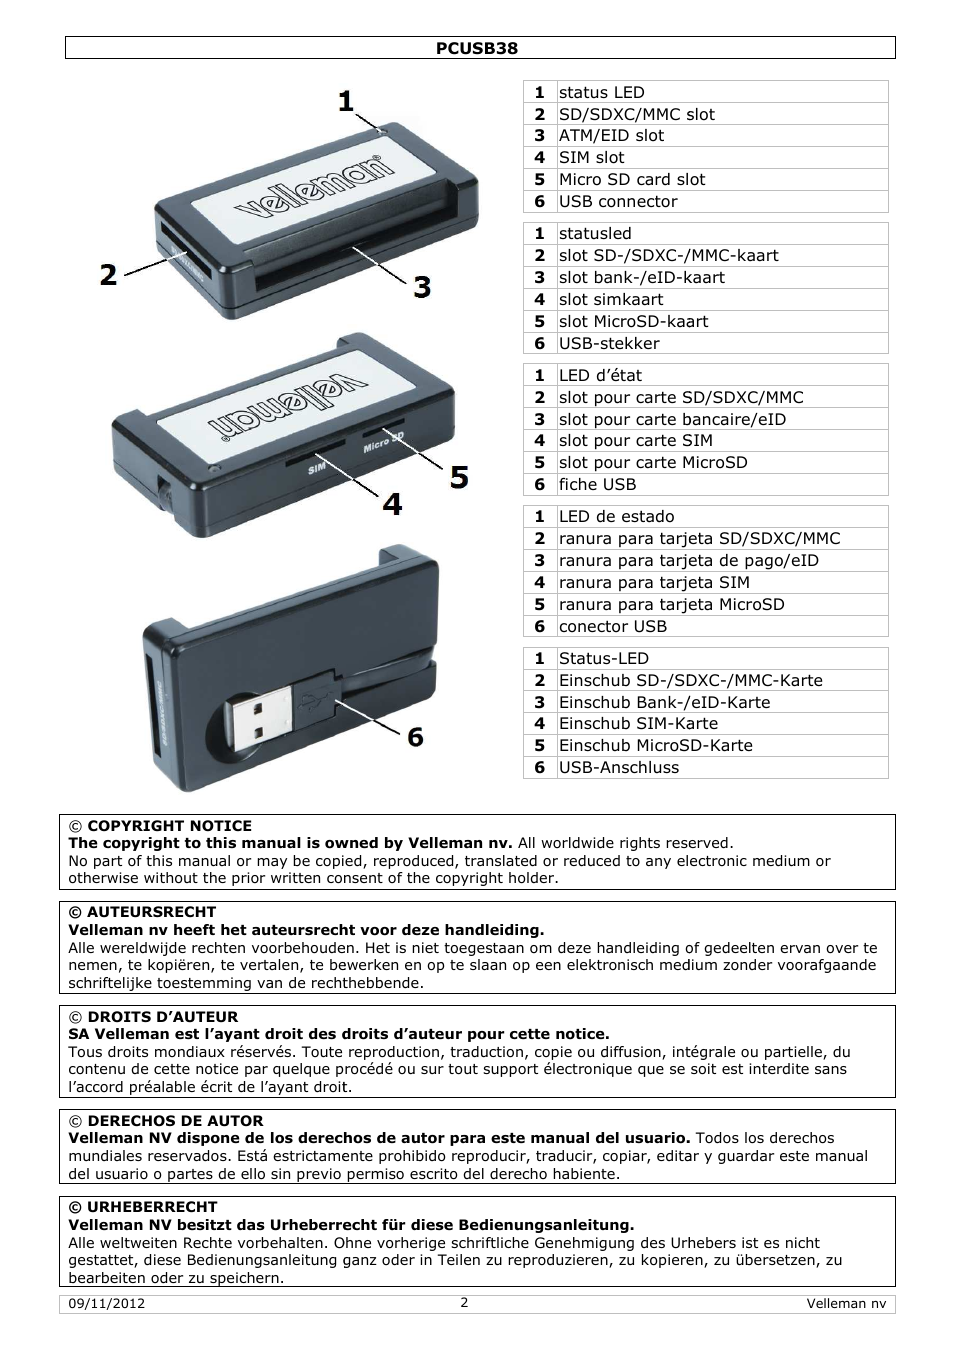 Velleman PCUSB38 User Manual | Page 2 / 30 | Original mode